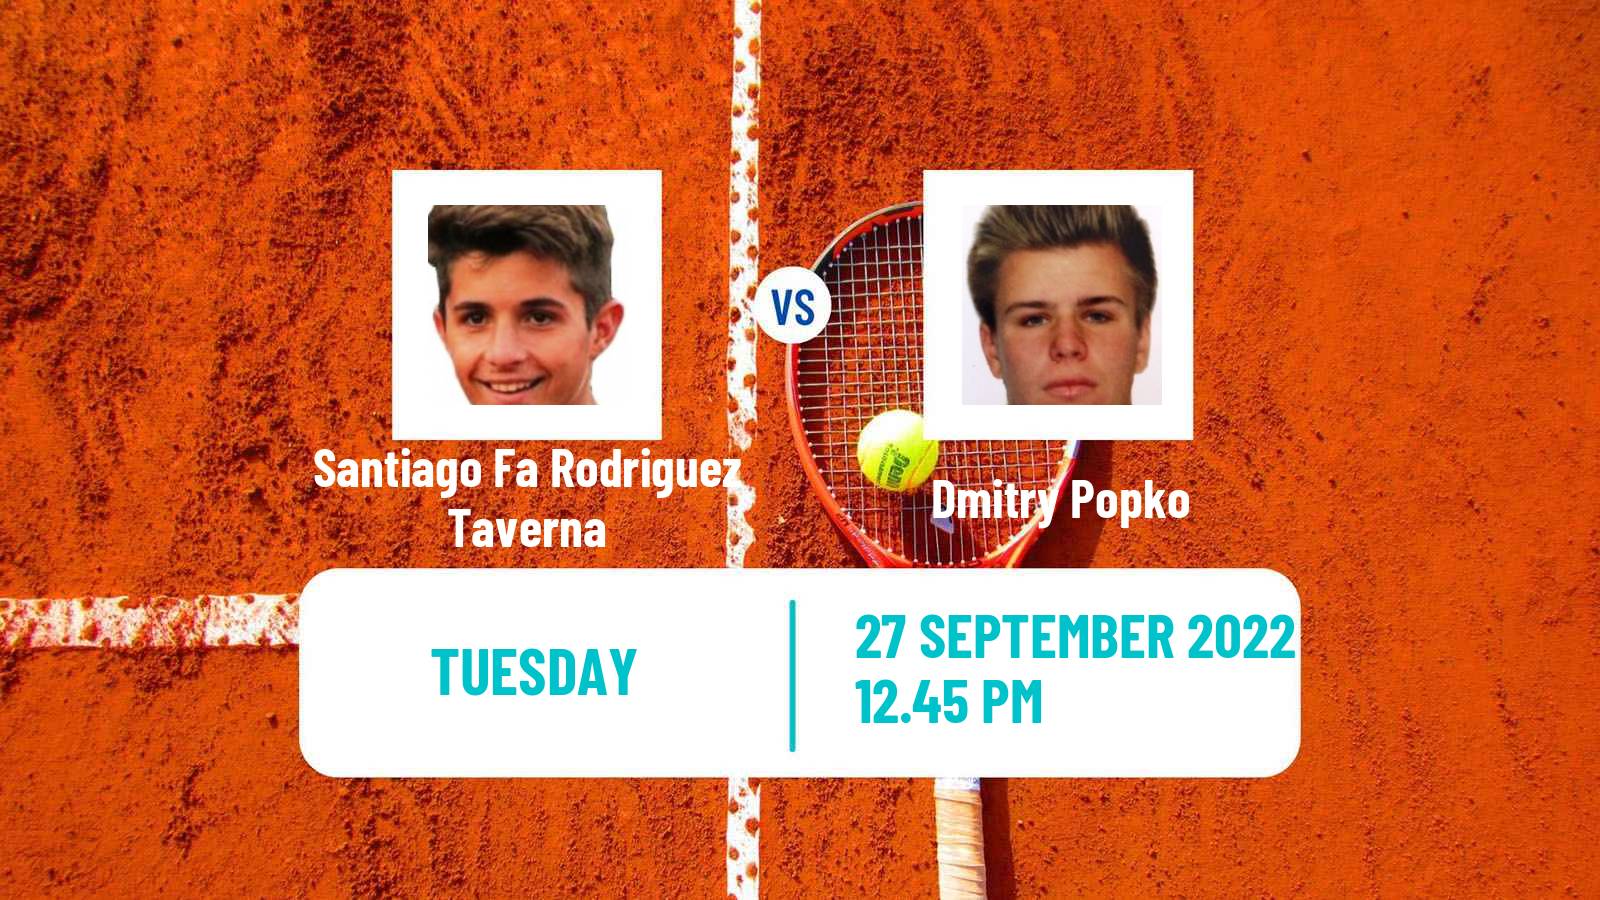 Tennis ATP Challenger Santiago Fa Rodriguez Taverna - Dmitry Popko